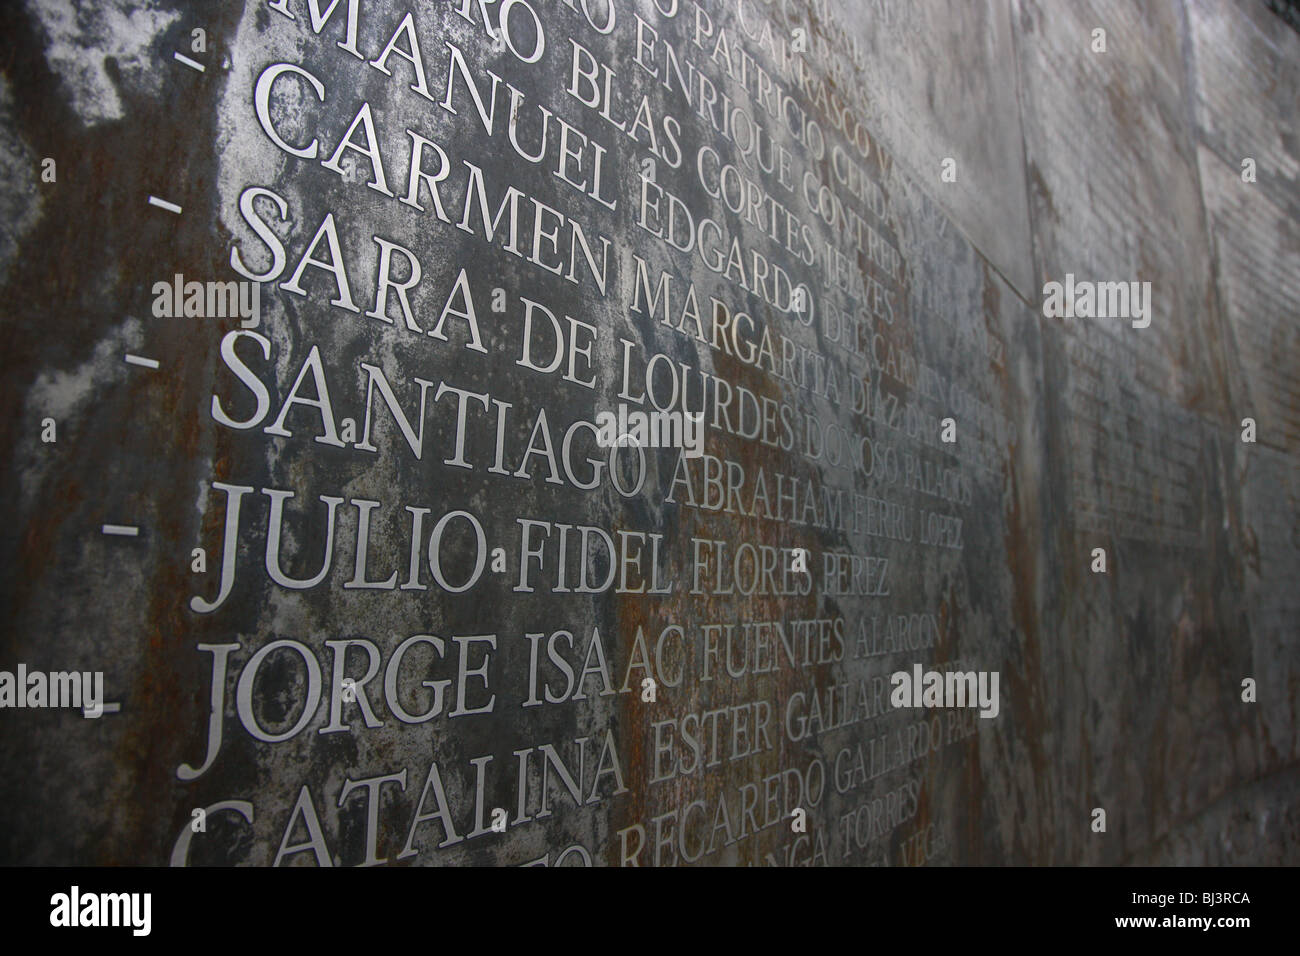 Plaque commemorating the executed, Villa Grimaldi, torture center, Santiago de Chile, Chile, South America Stock Photo